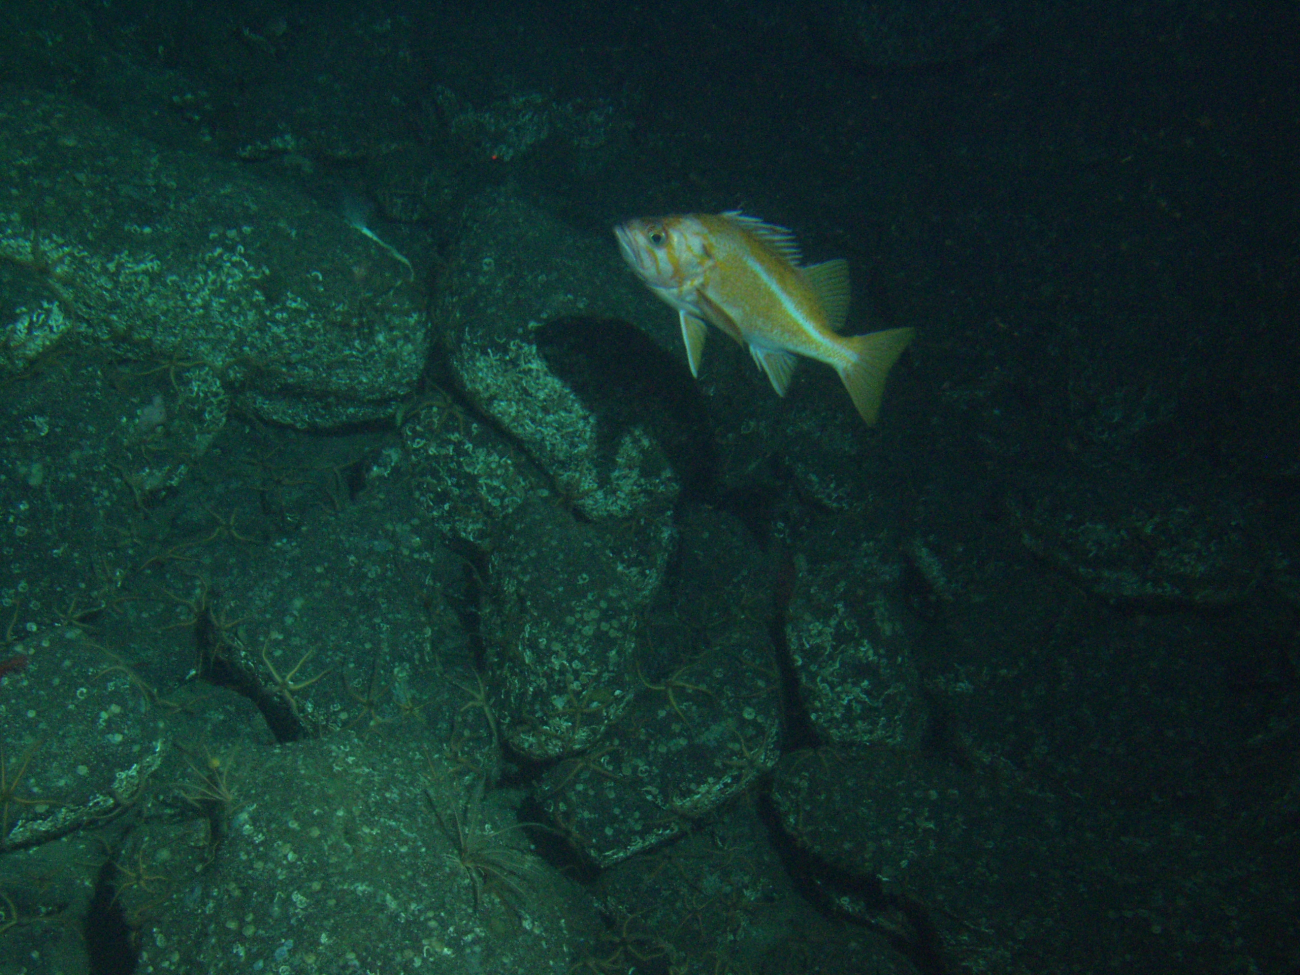 Canary rockfish (Sebastes miniatus) over bolder habitatat 115 meters depth